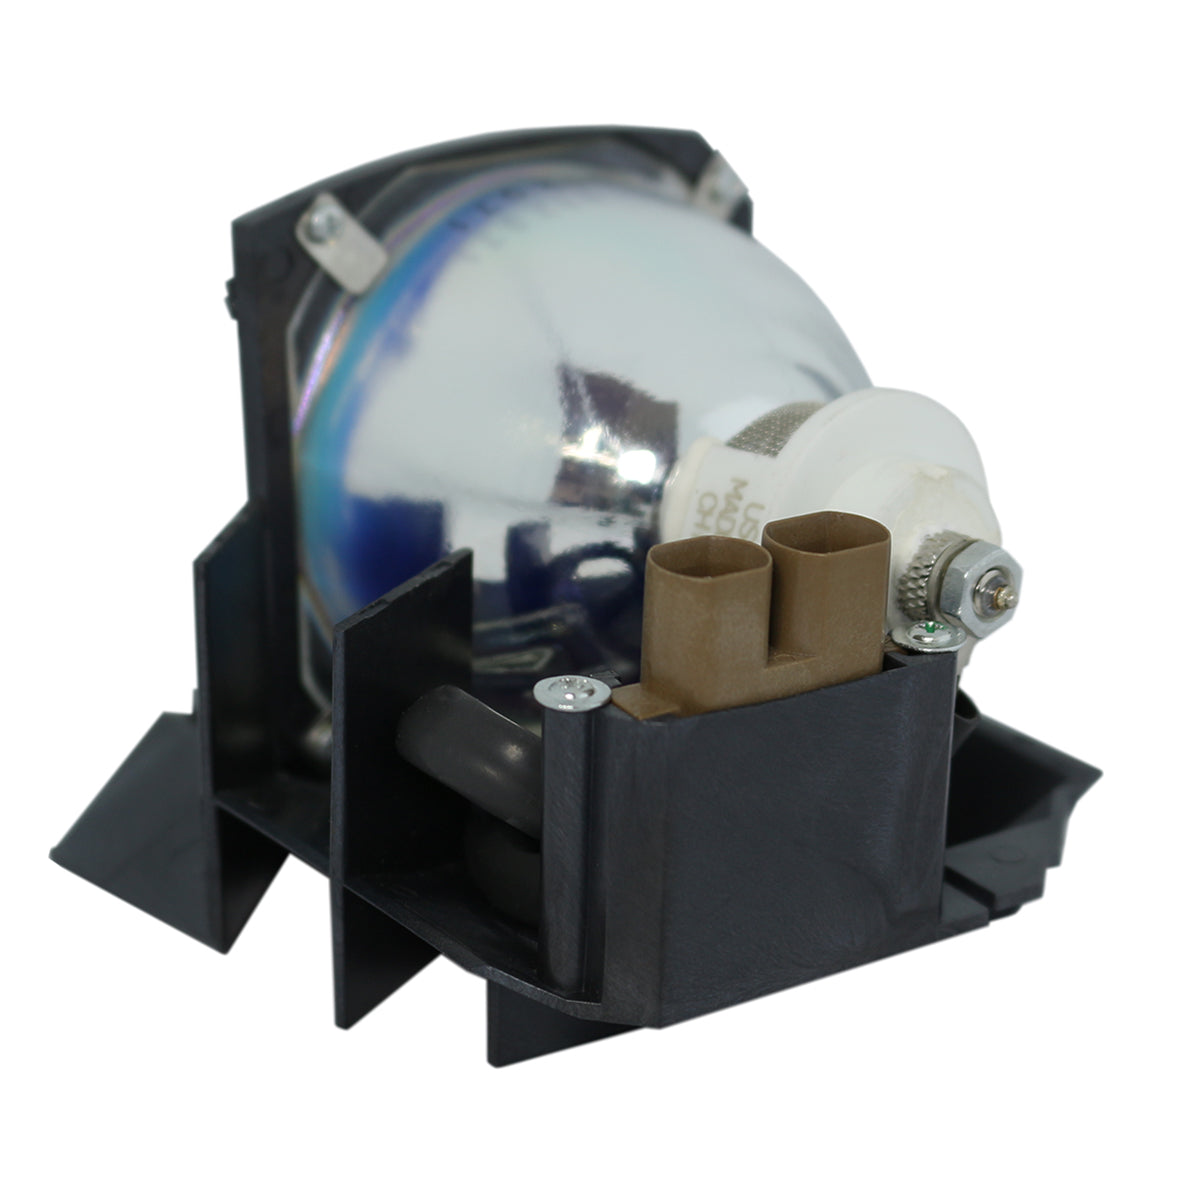 PLUS U5-200 Ushio Projector Lamp Module